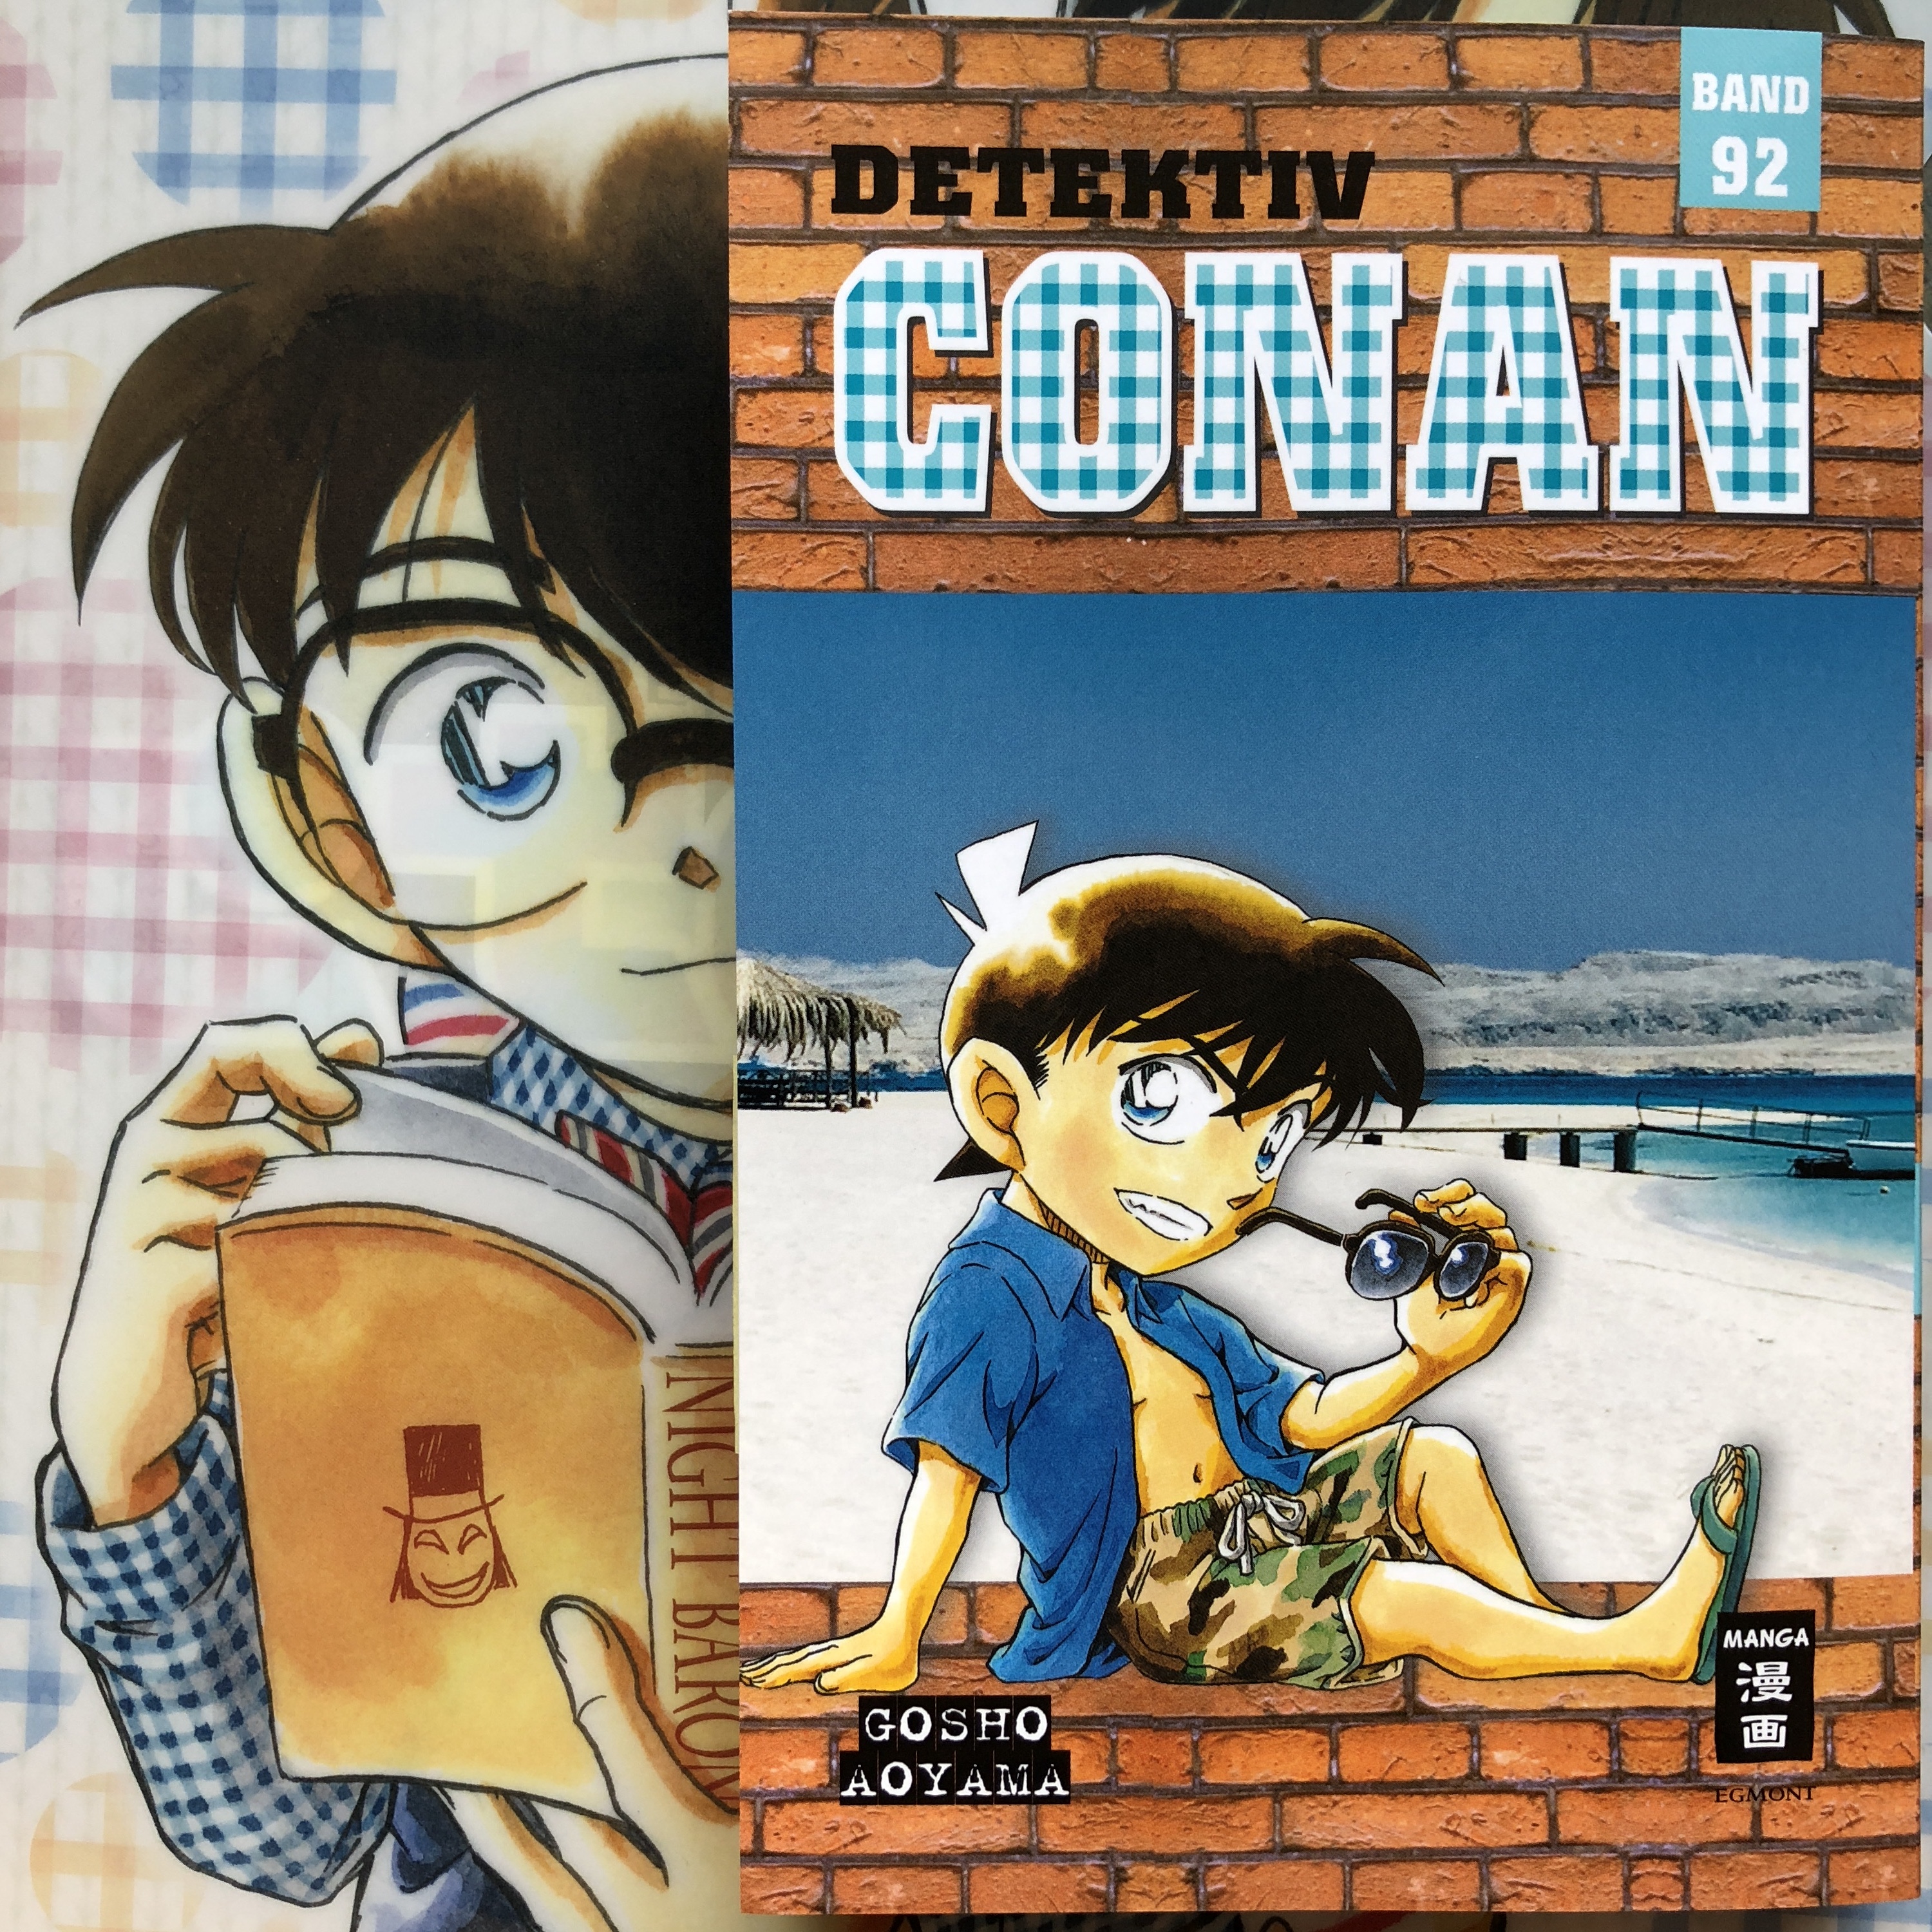 Detektiv Conan Band 92